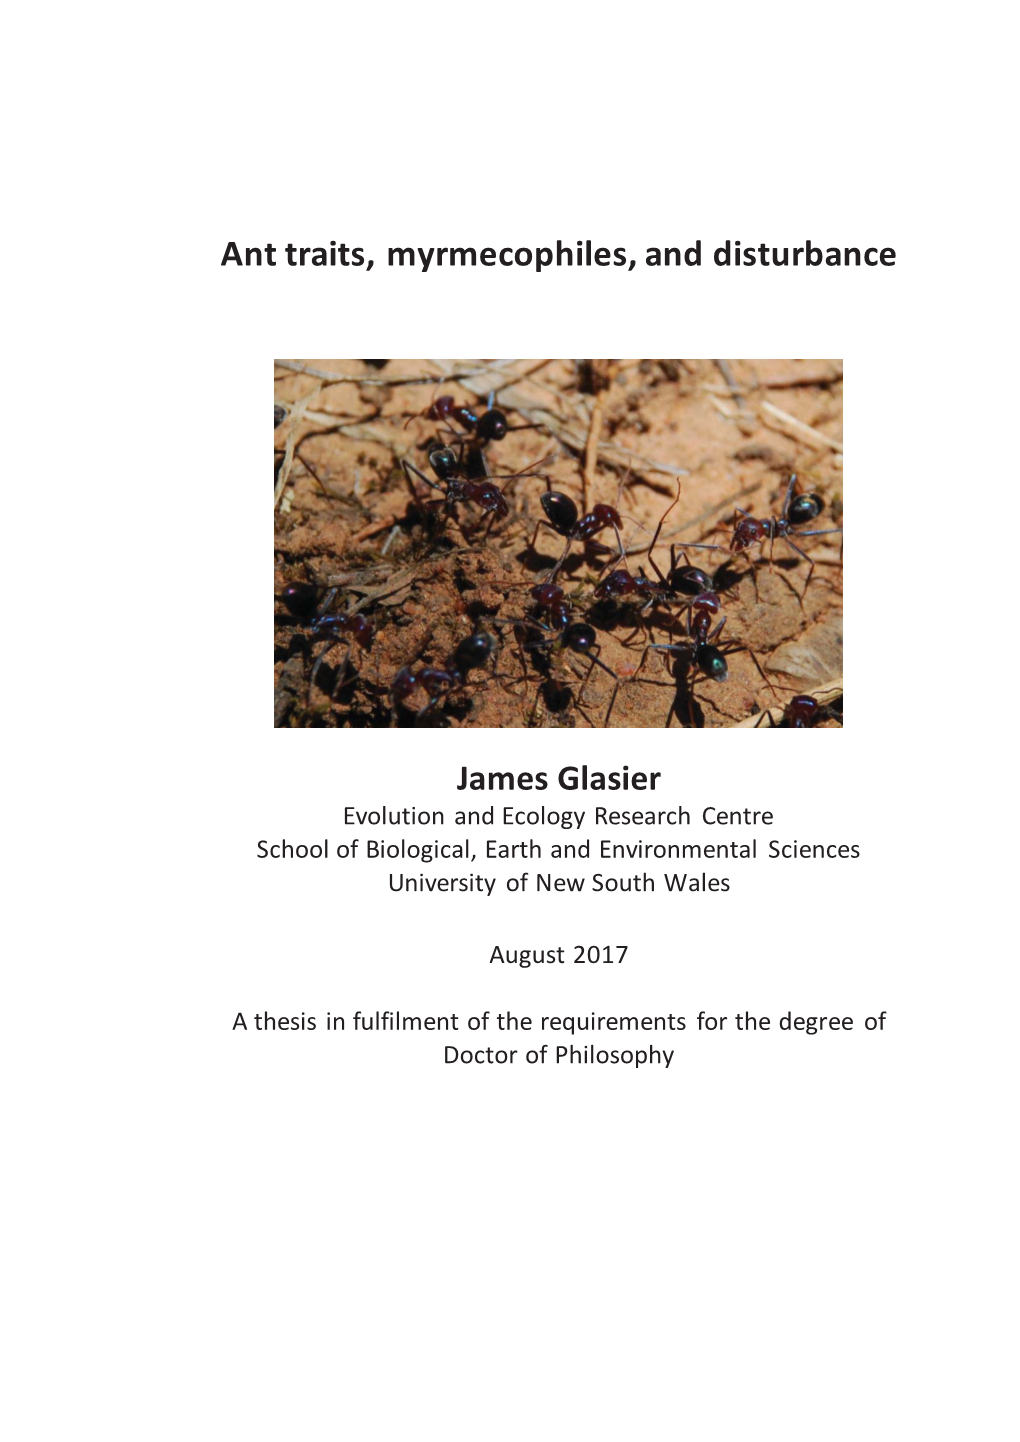 Ant Traits, Myrmecophiles, and Disturbance